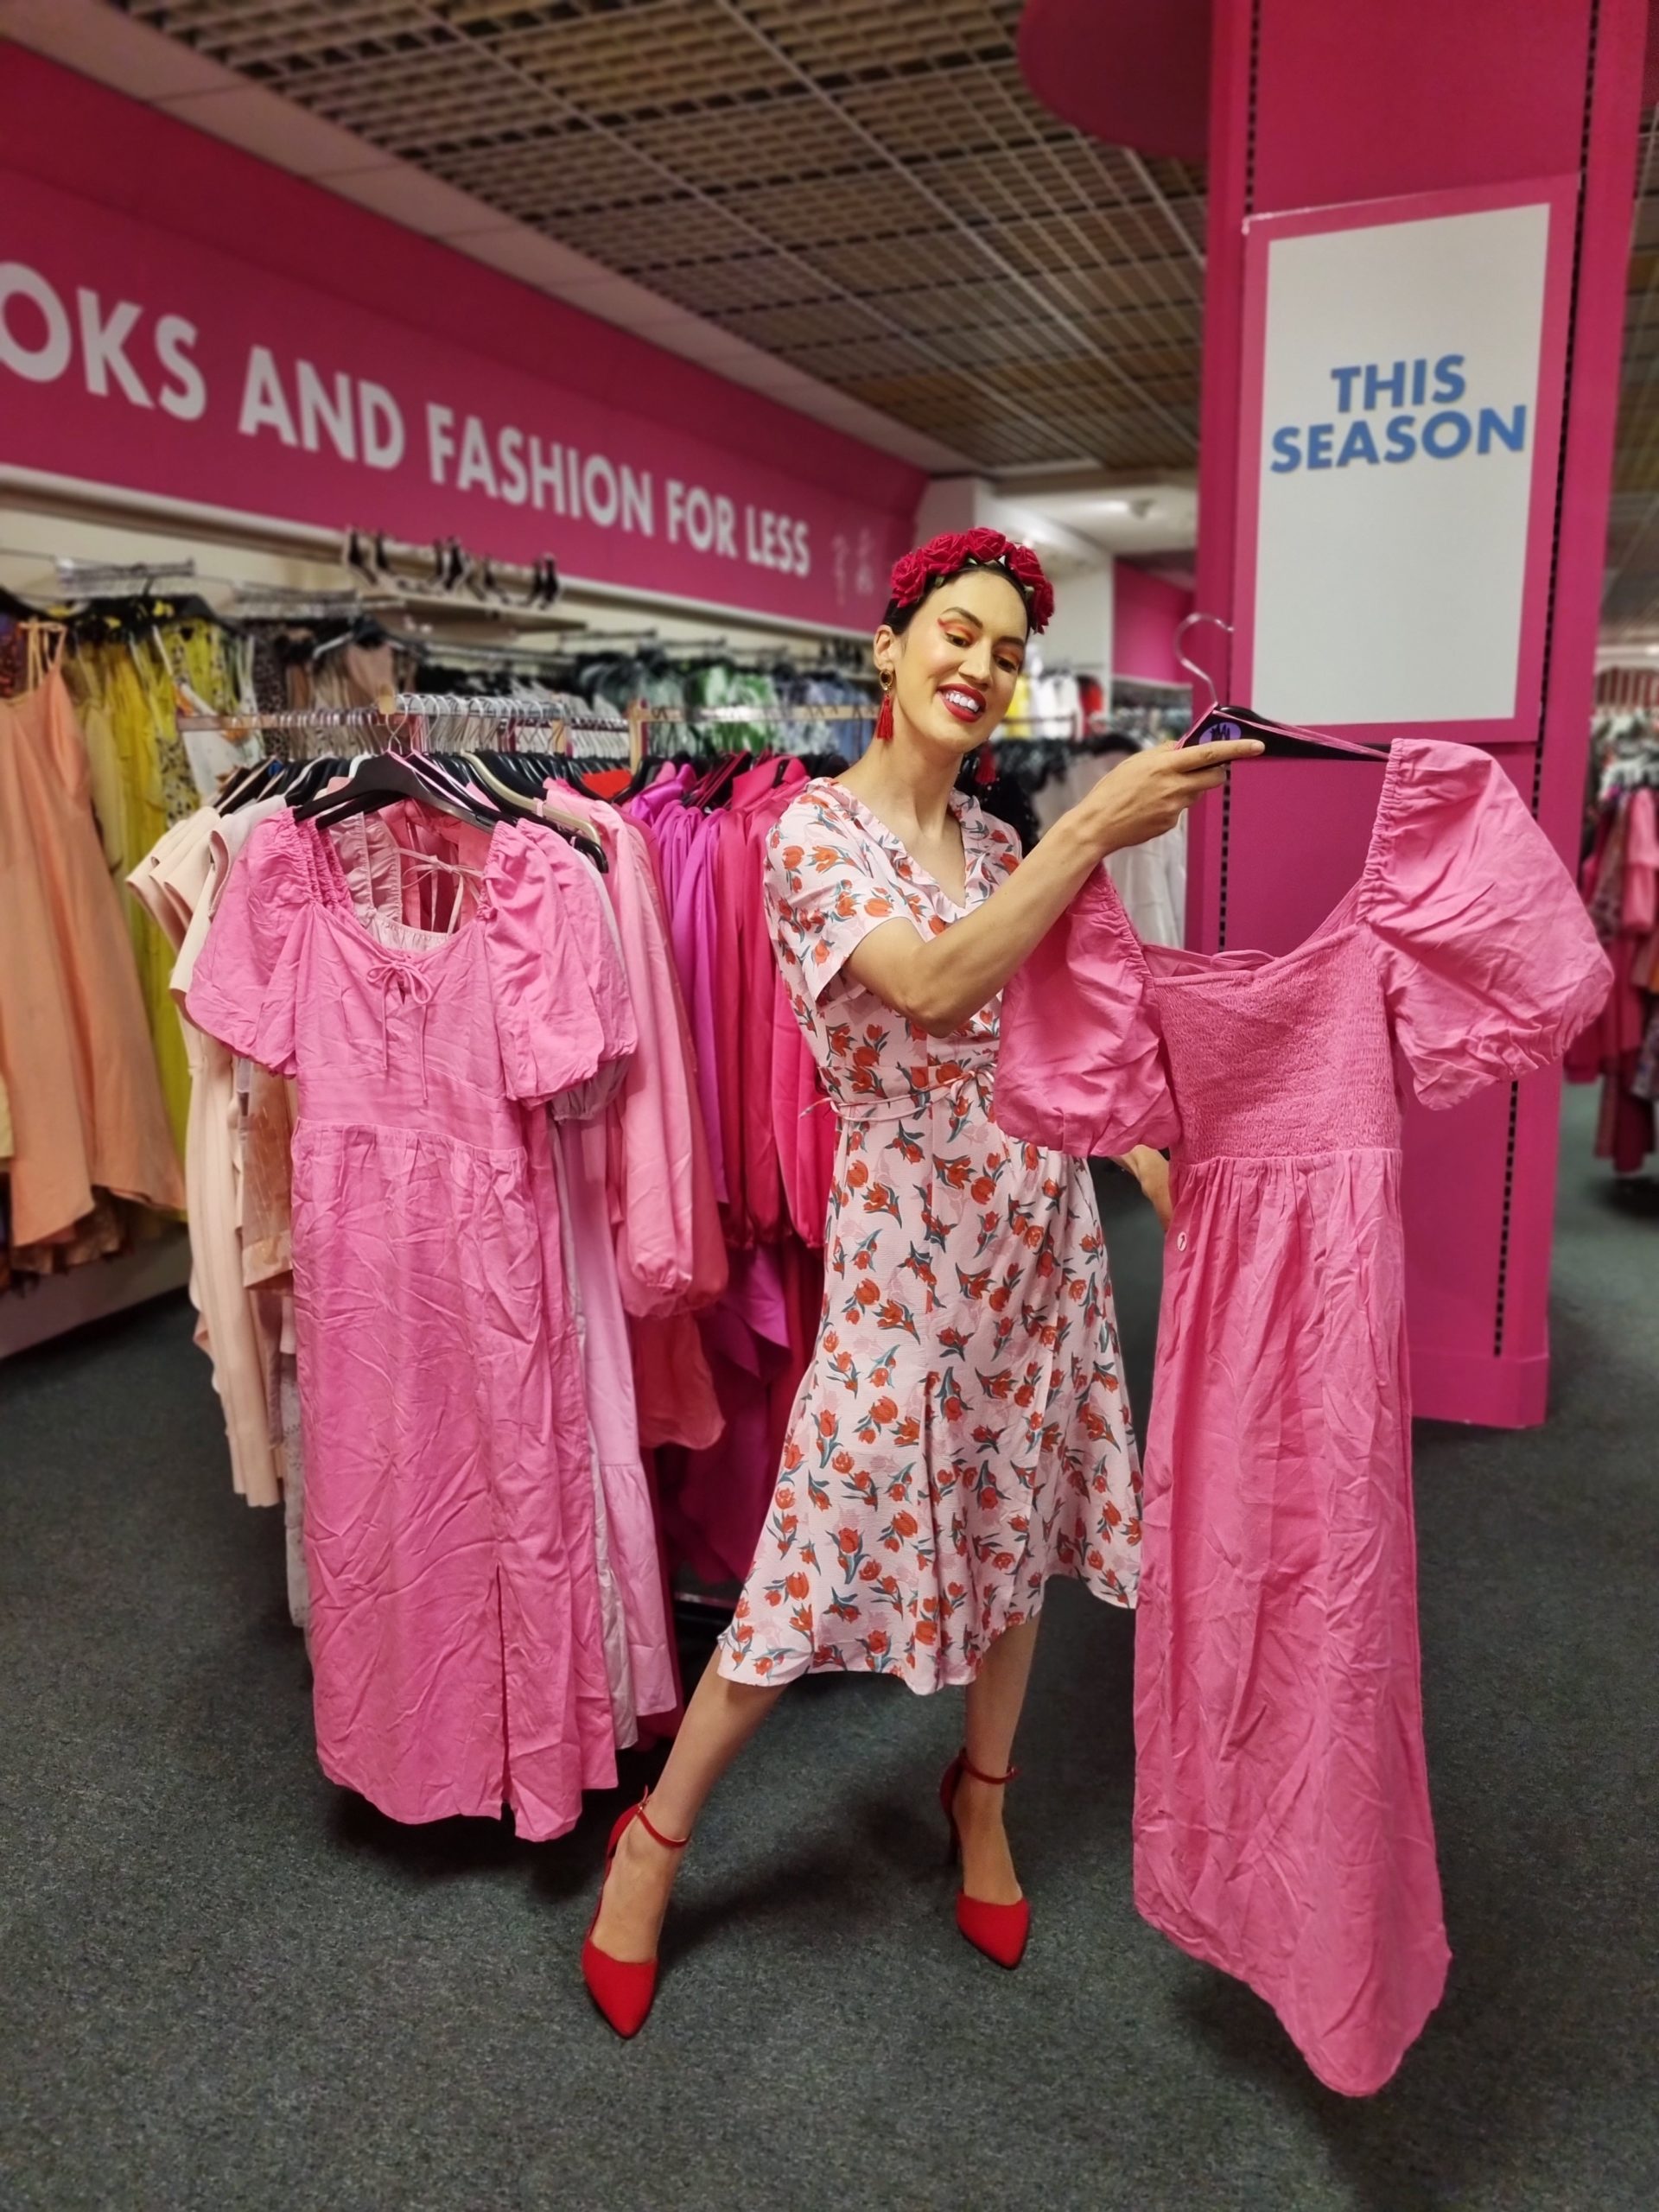 <img src="ana.jpg" alt="ana smiling at pink thrifted cotton dress "/> 